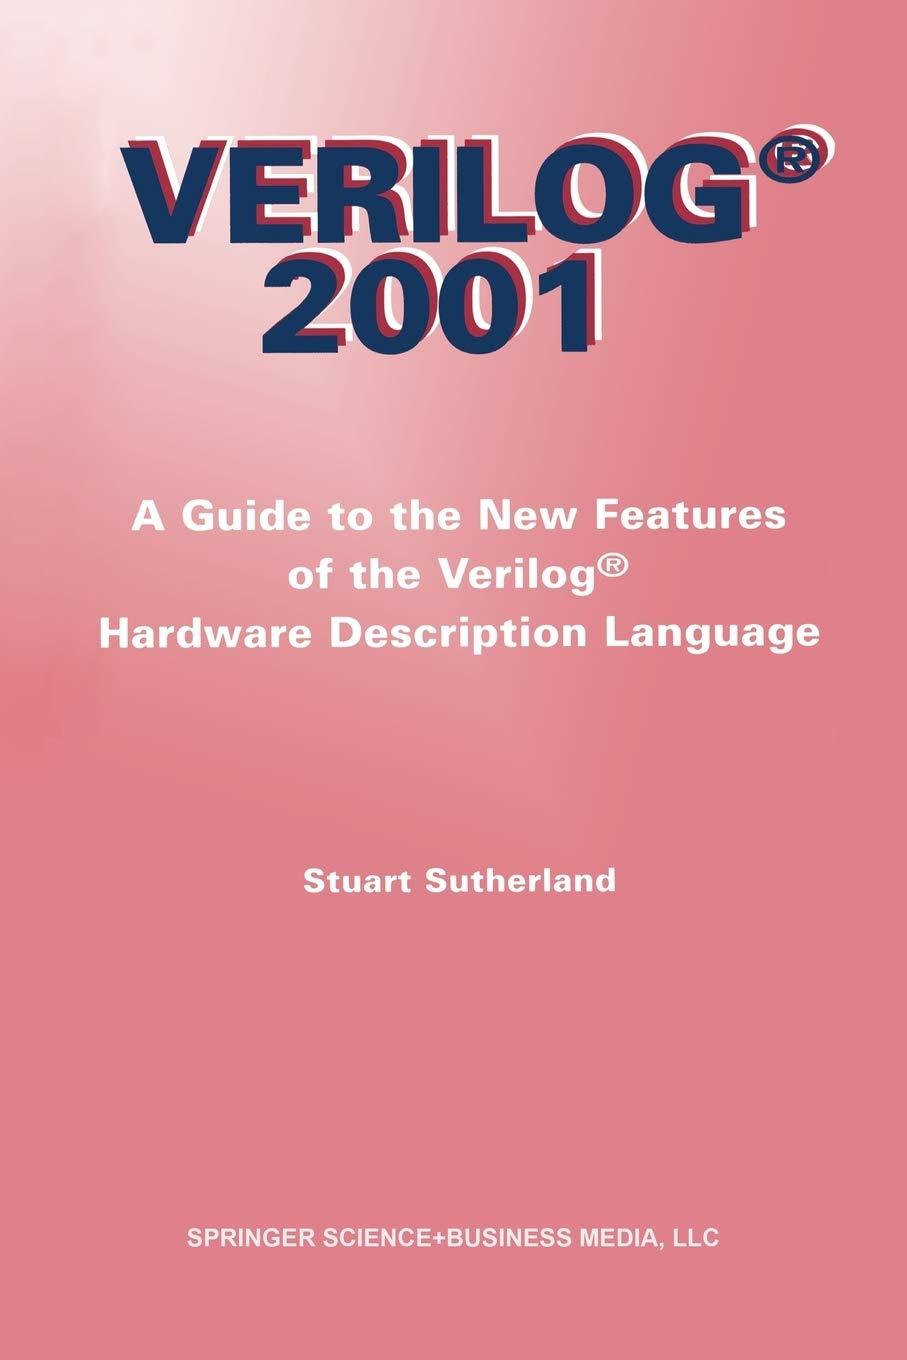 verilog 2001 a guide to the new features of the verilog hardware description language 2002 edition stuart